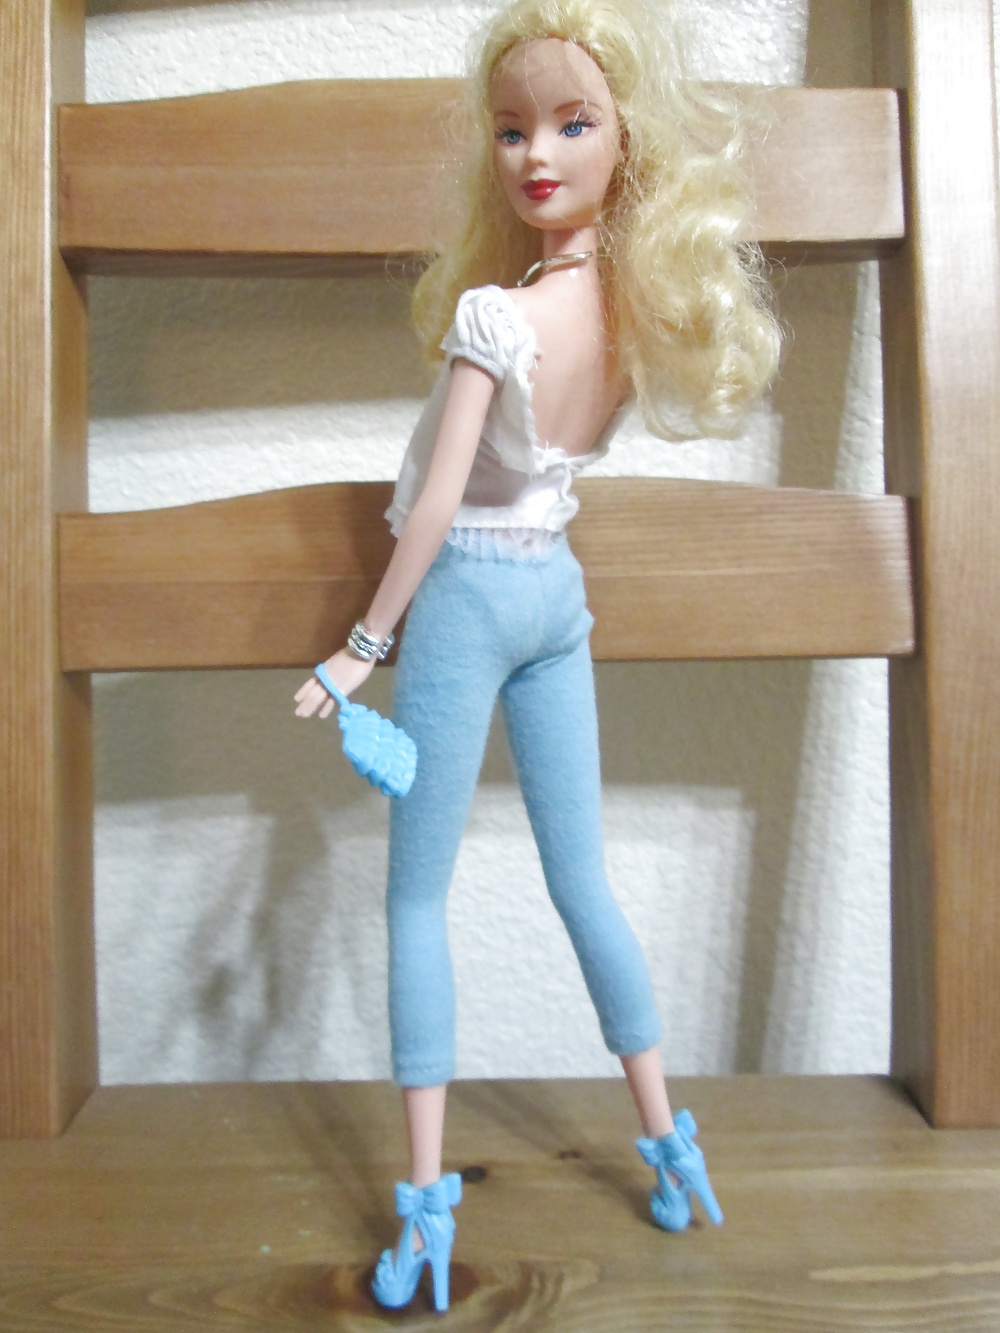 Classic blond Barbie, softcore #40360149